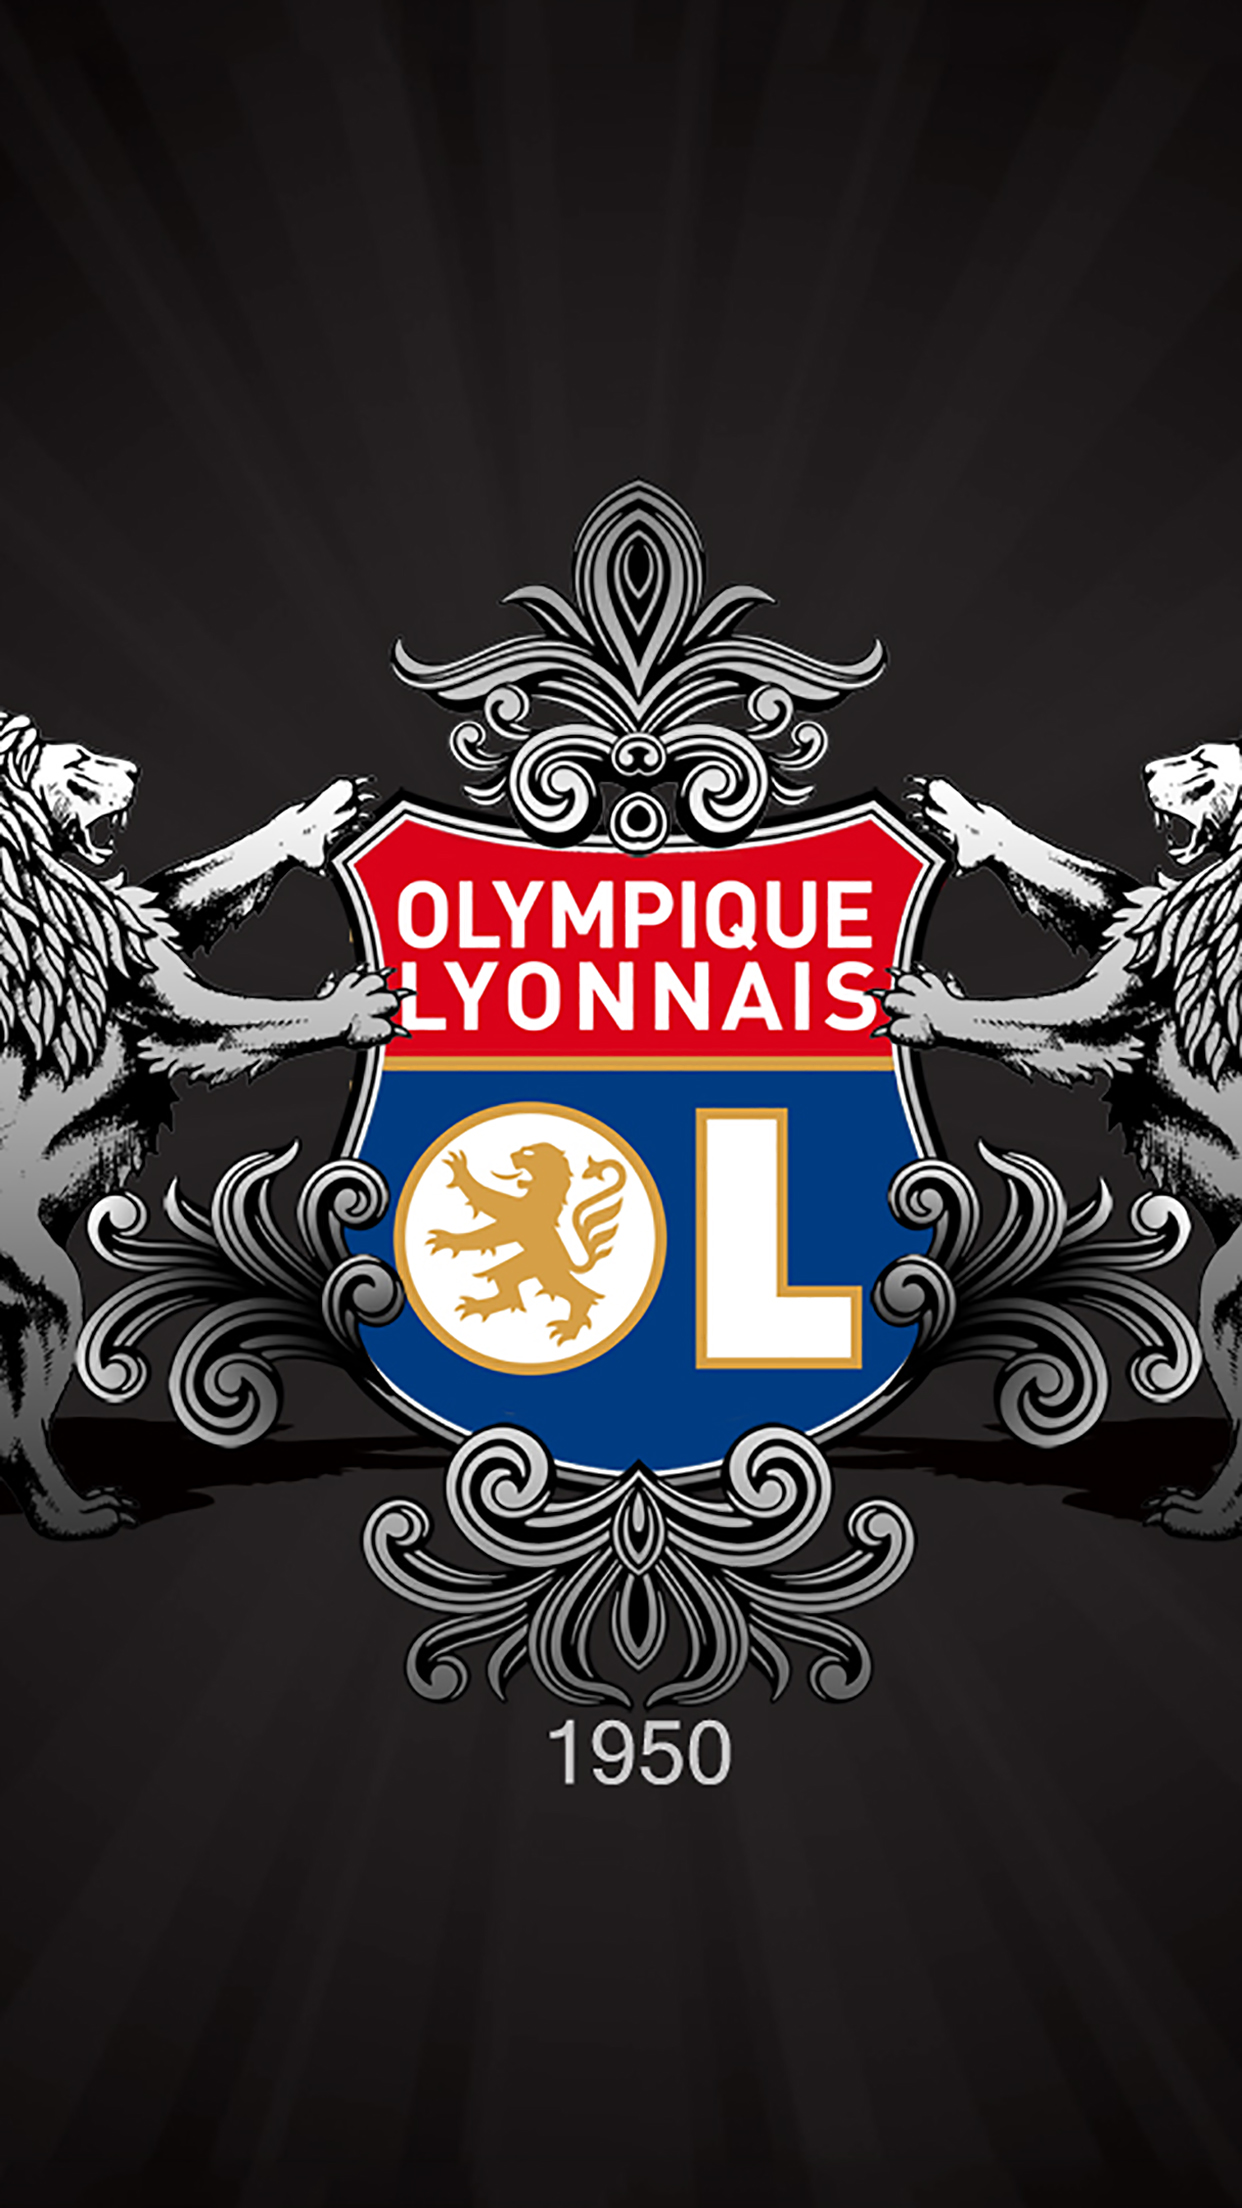 Olympique Lyonnais Logo Wallpaper For iPhone X